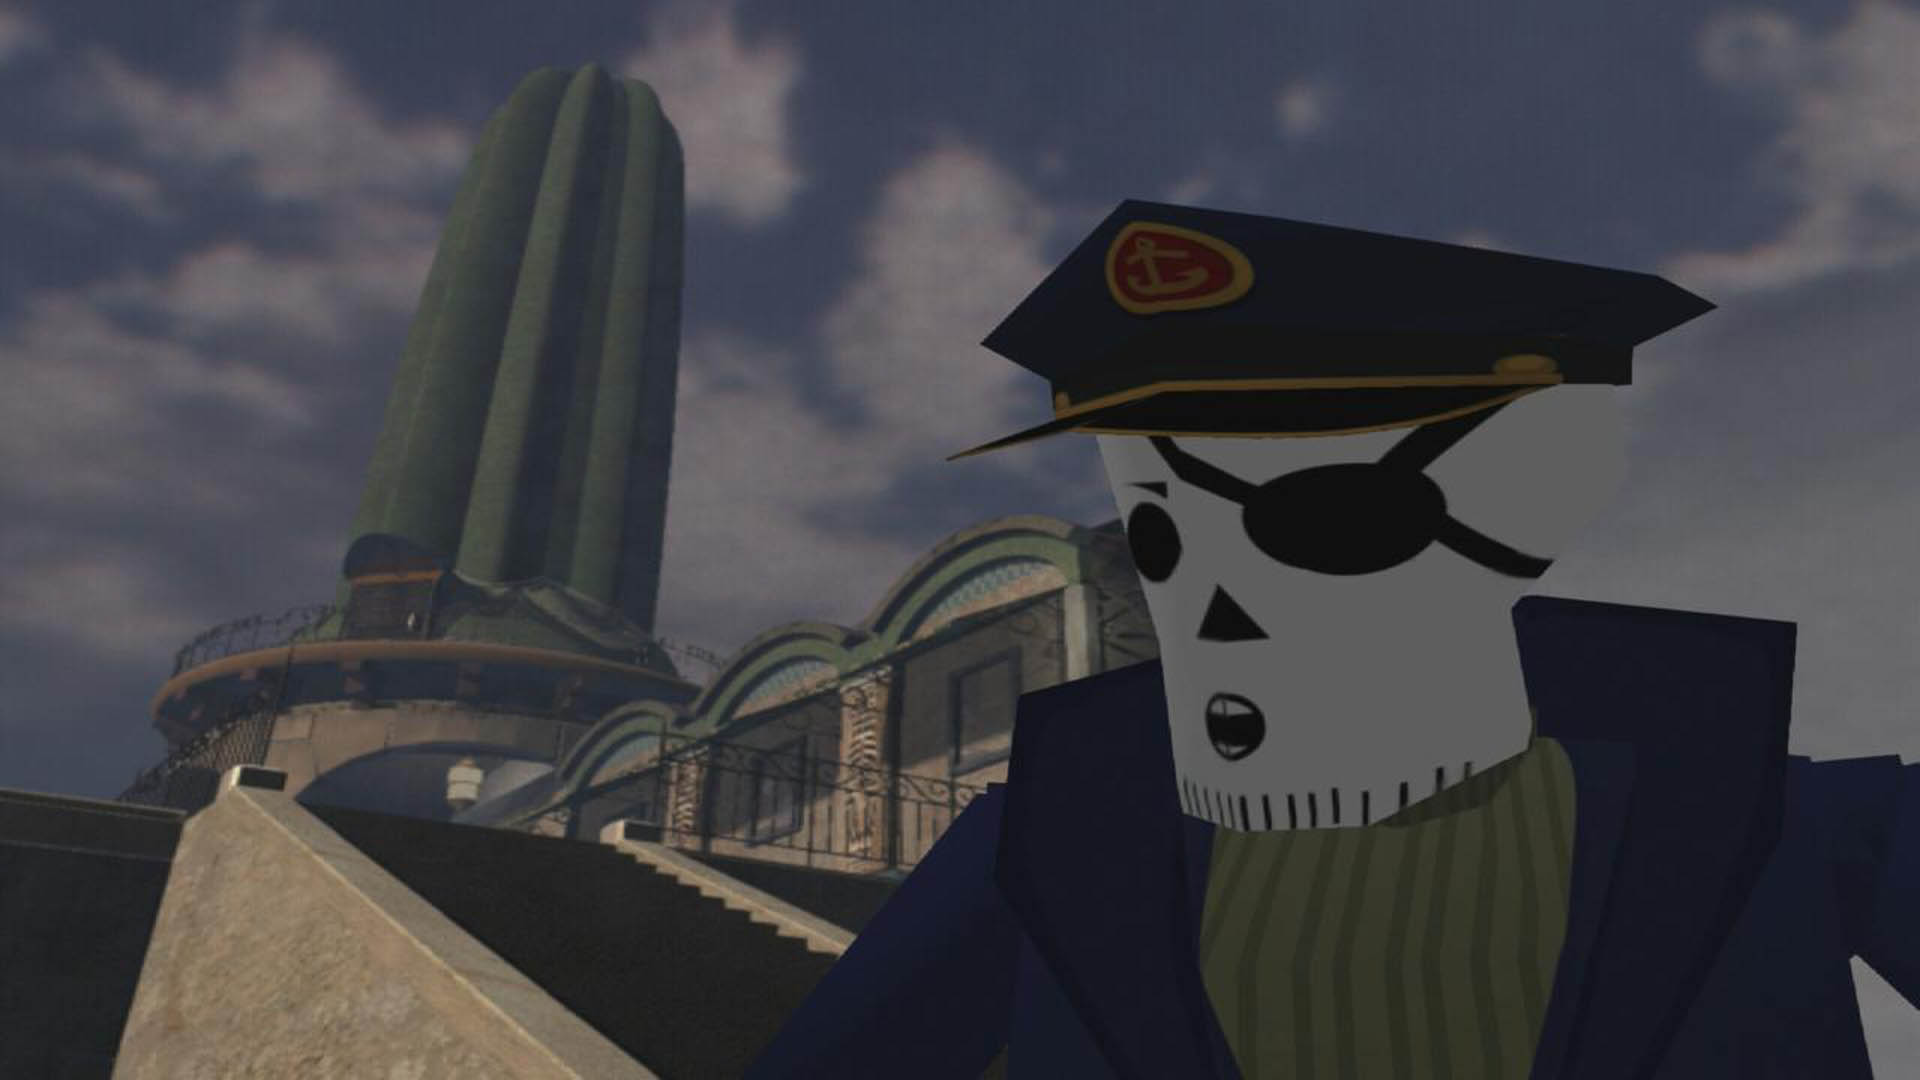 A gameplay screenshot from Grim Fandango